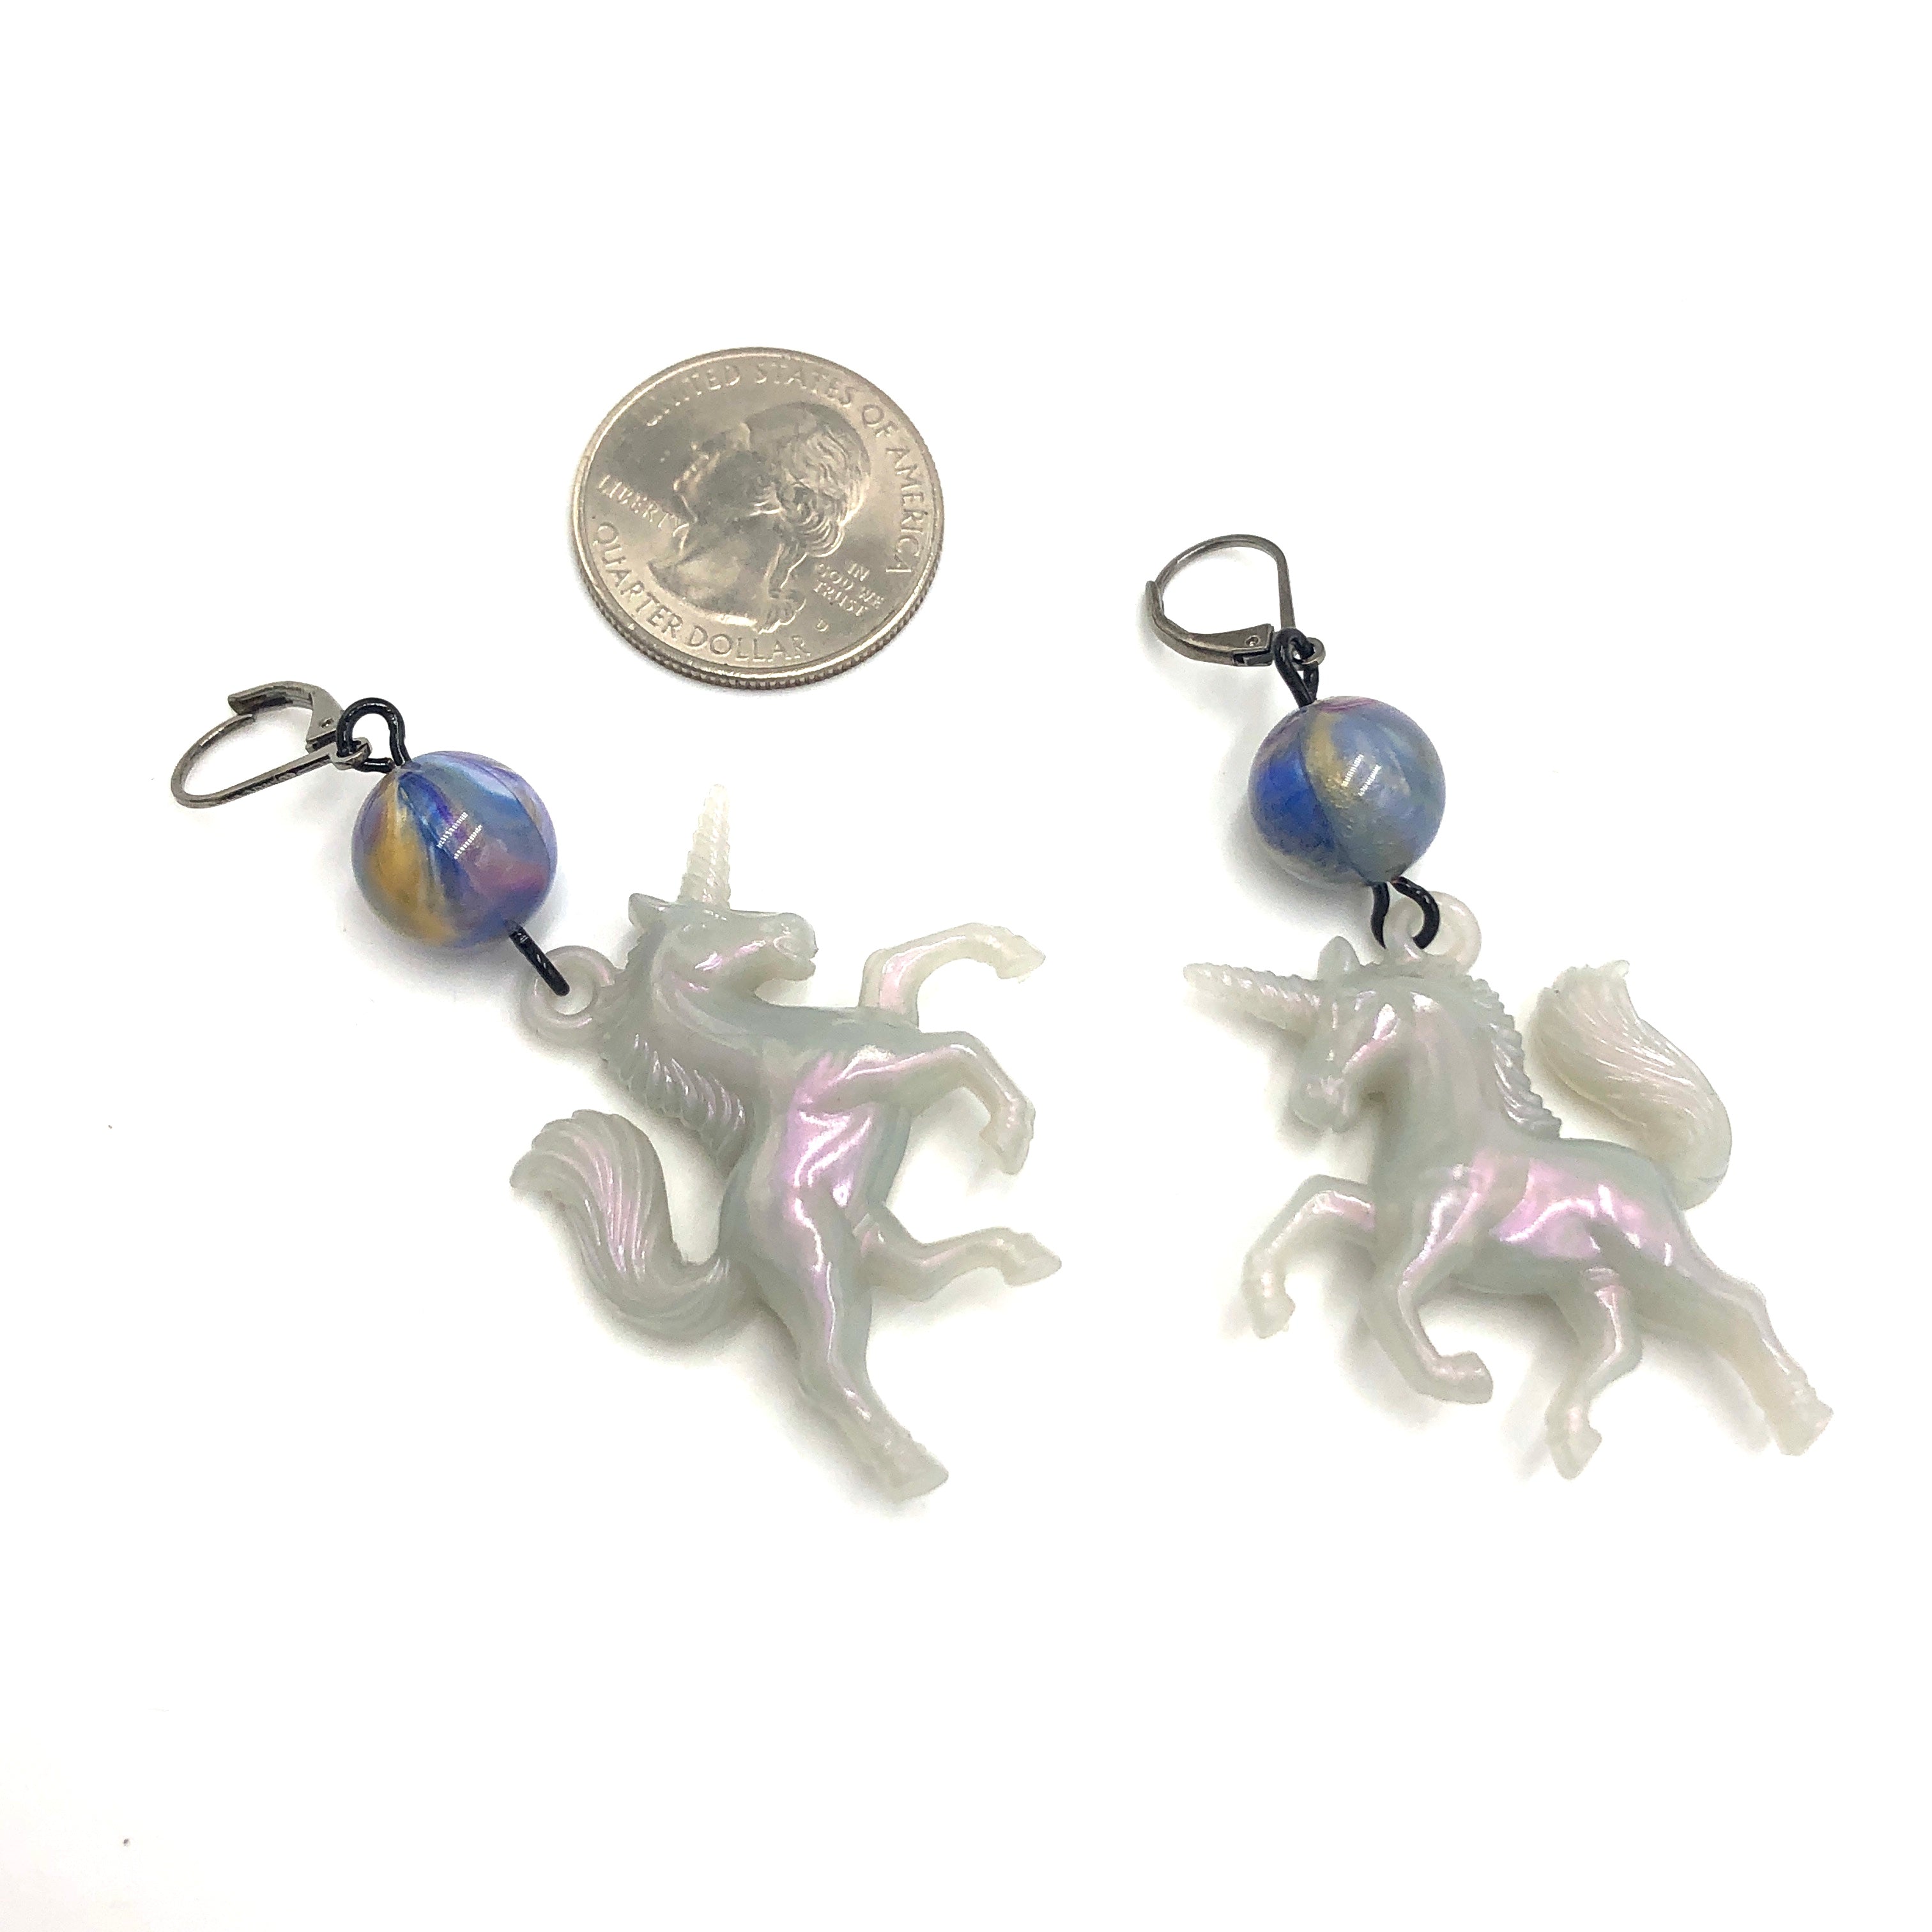 rainbow unicorn earrings